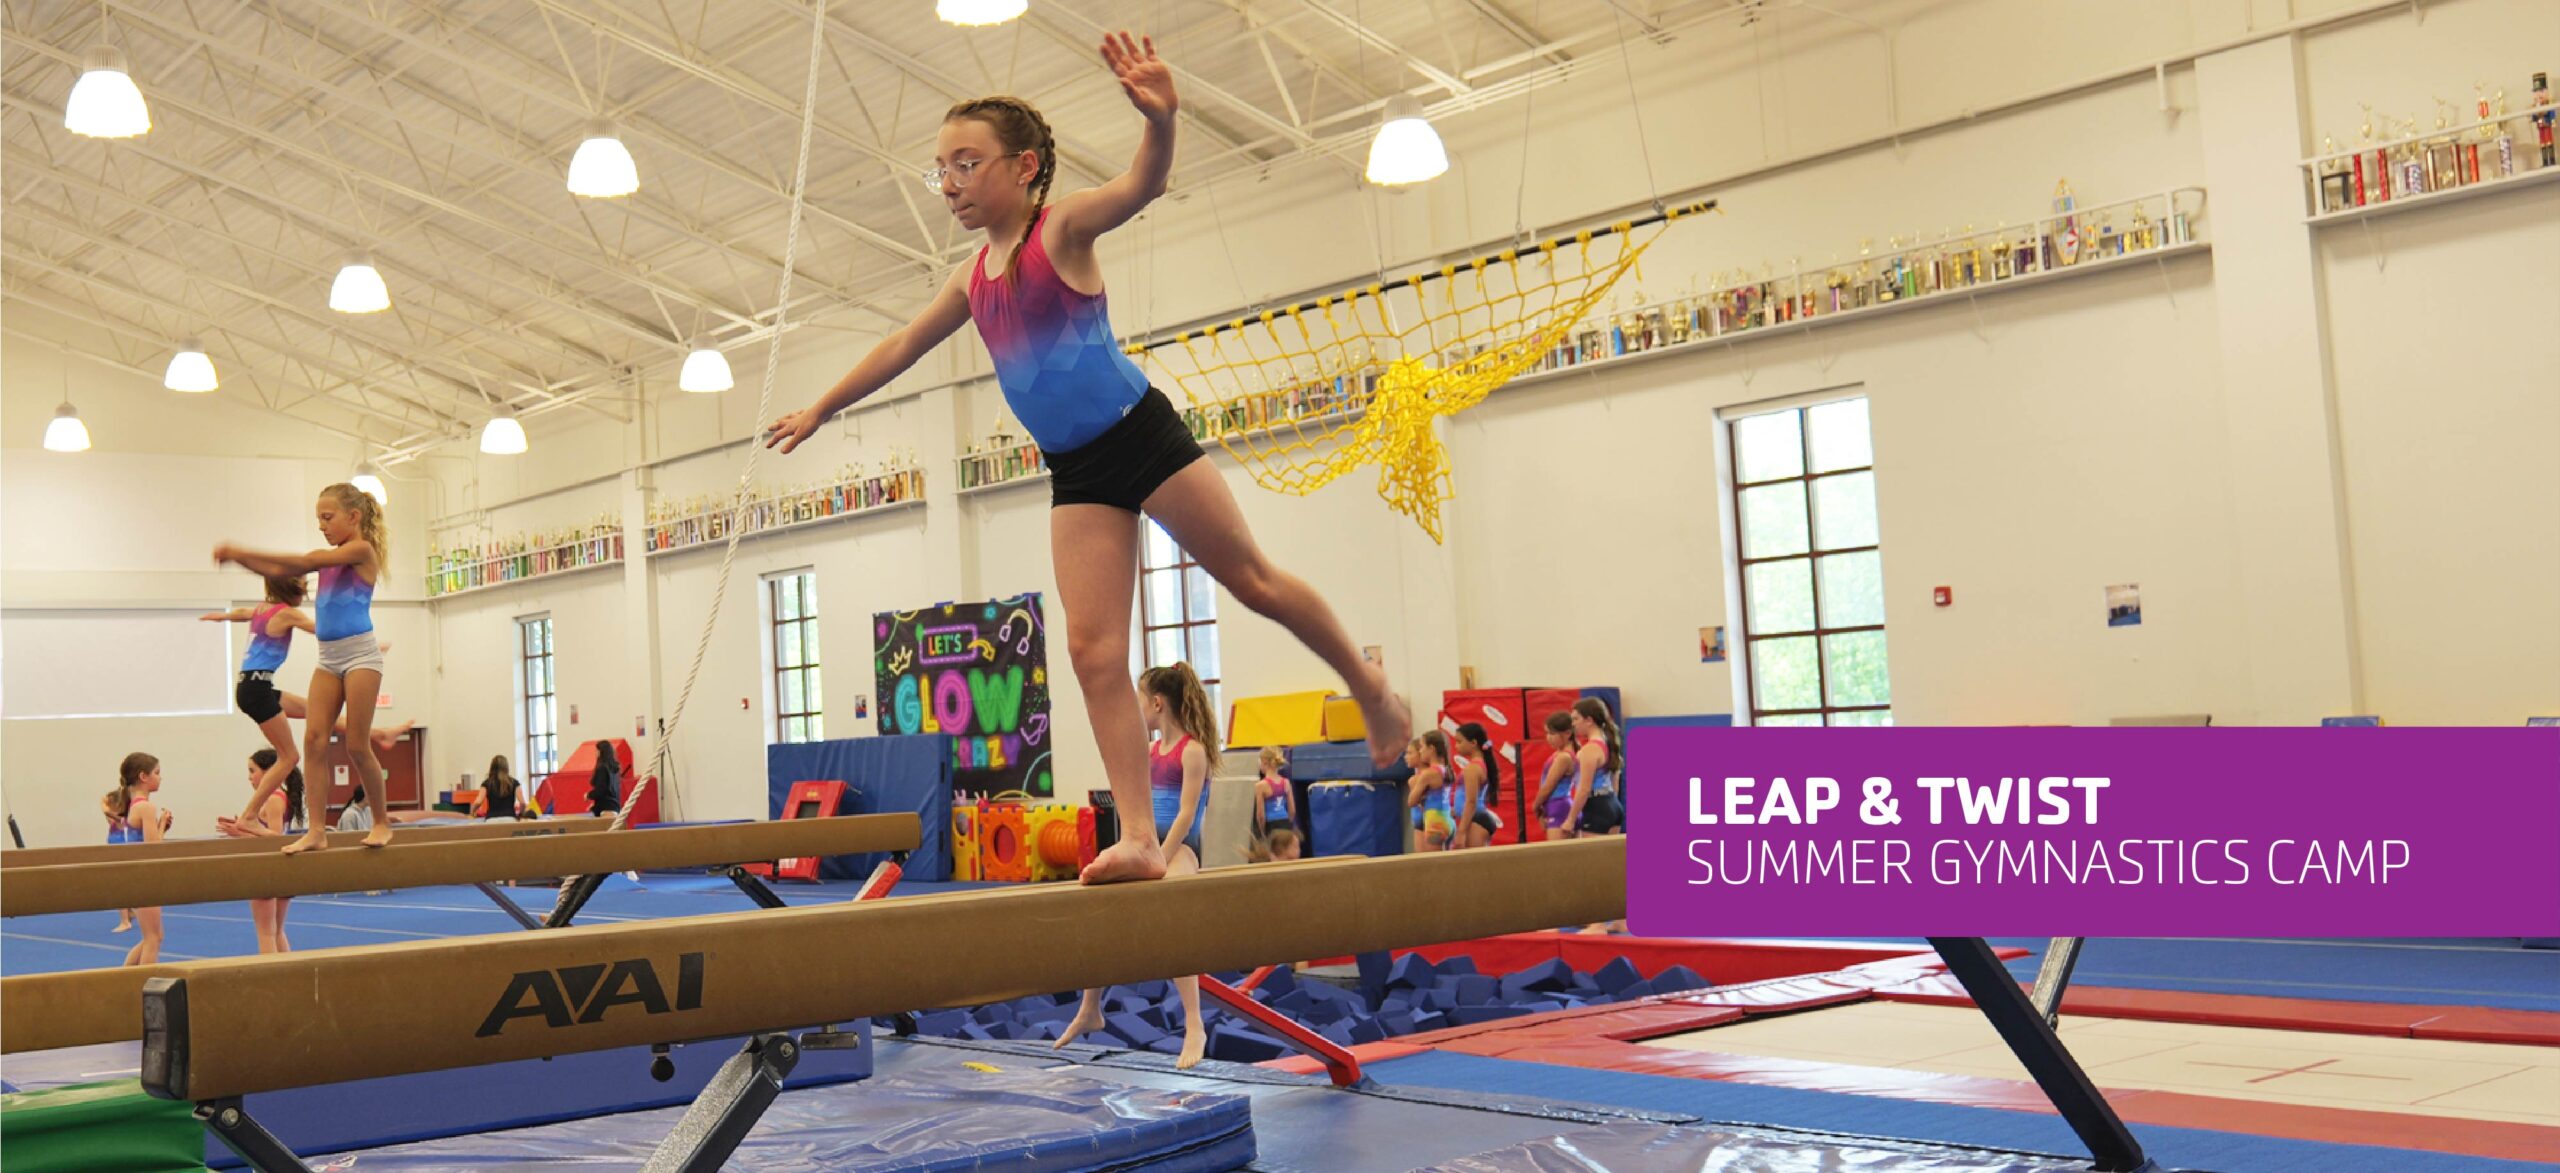 Gymnastics Summer Camp at the Westport Weston Family YMCA